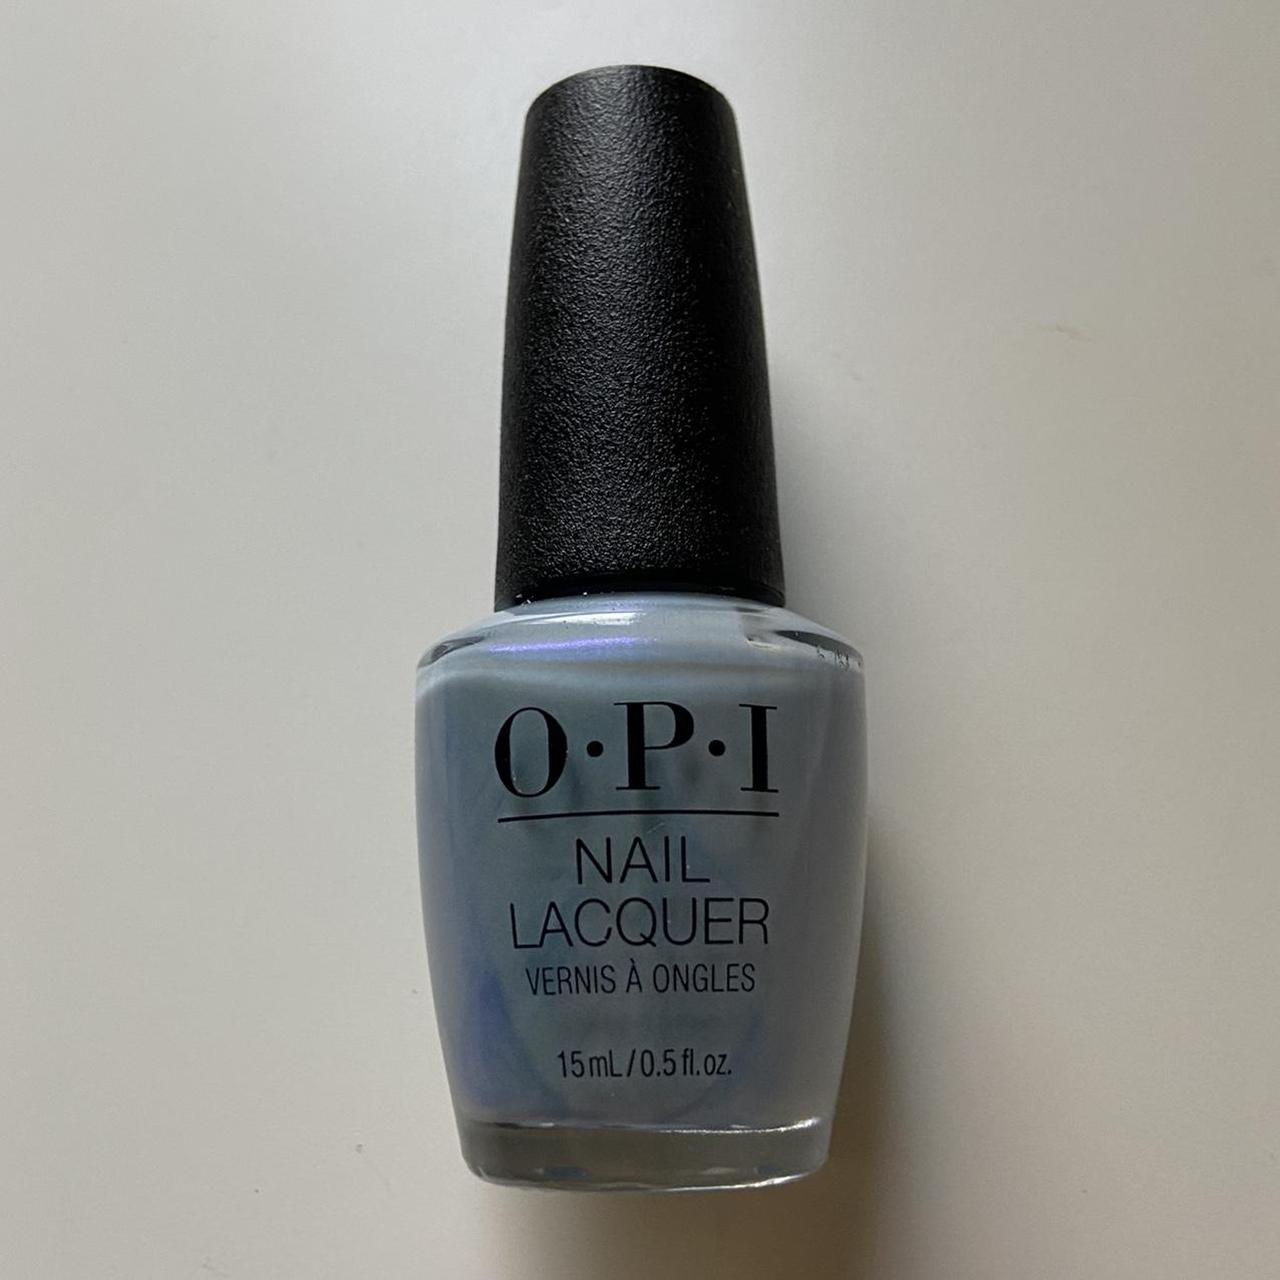 Product Image 1 - O.P.I Blue Nail Polish

- Used